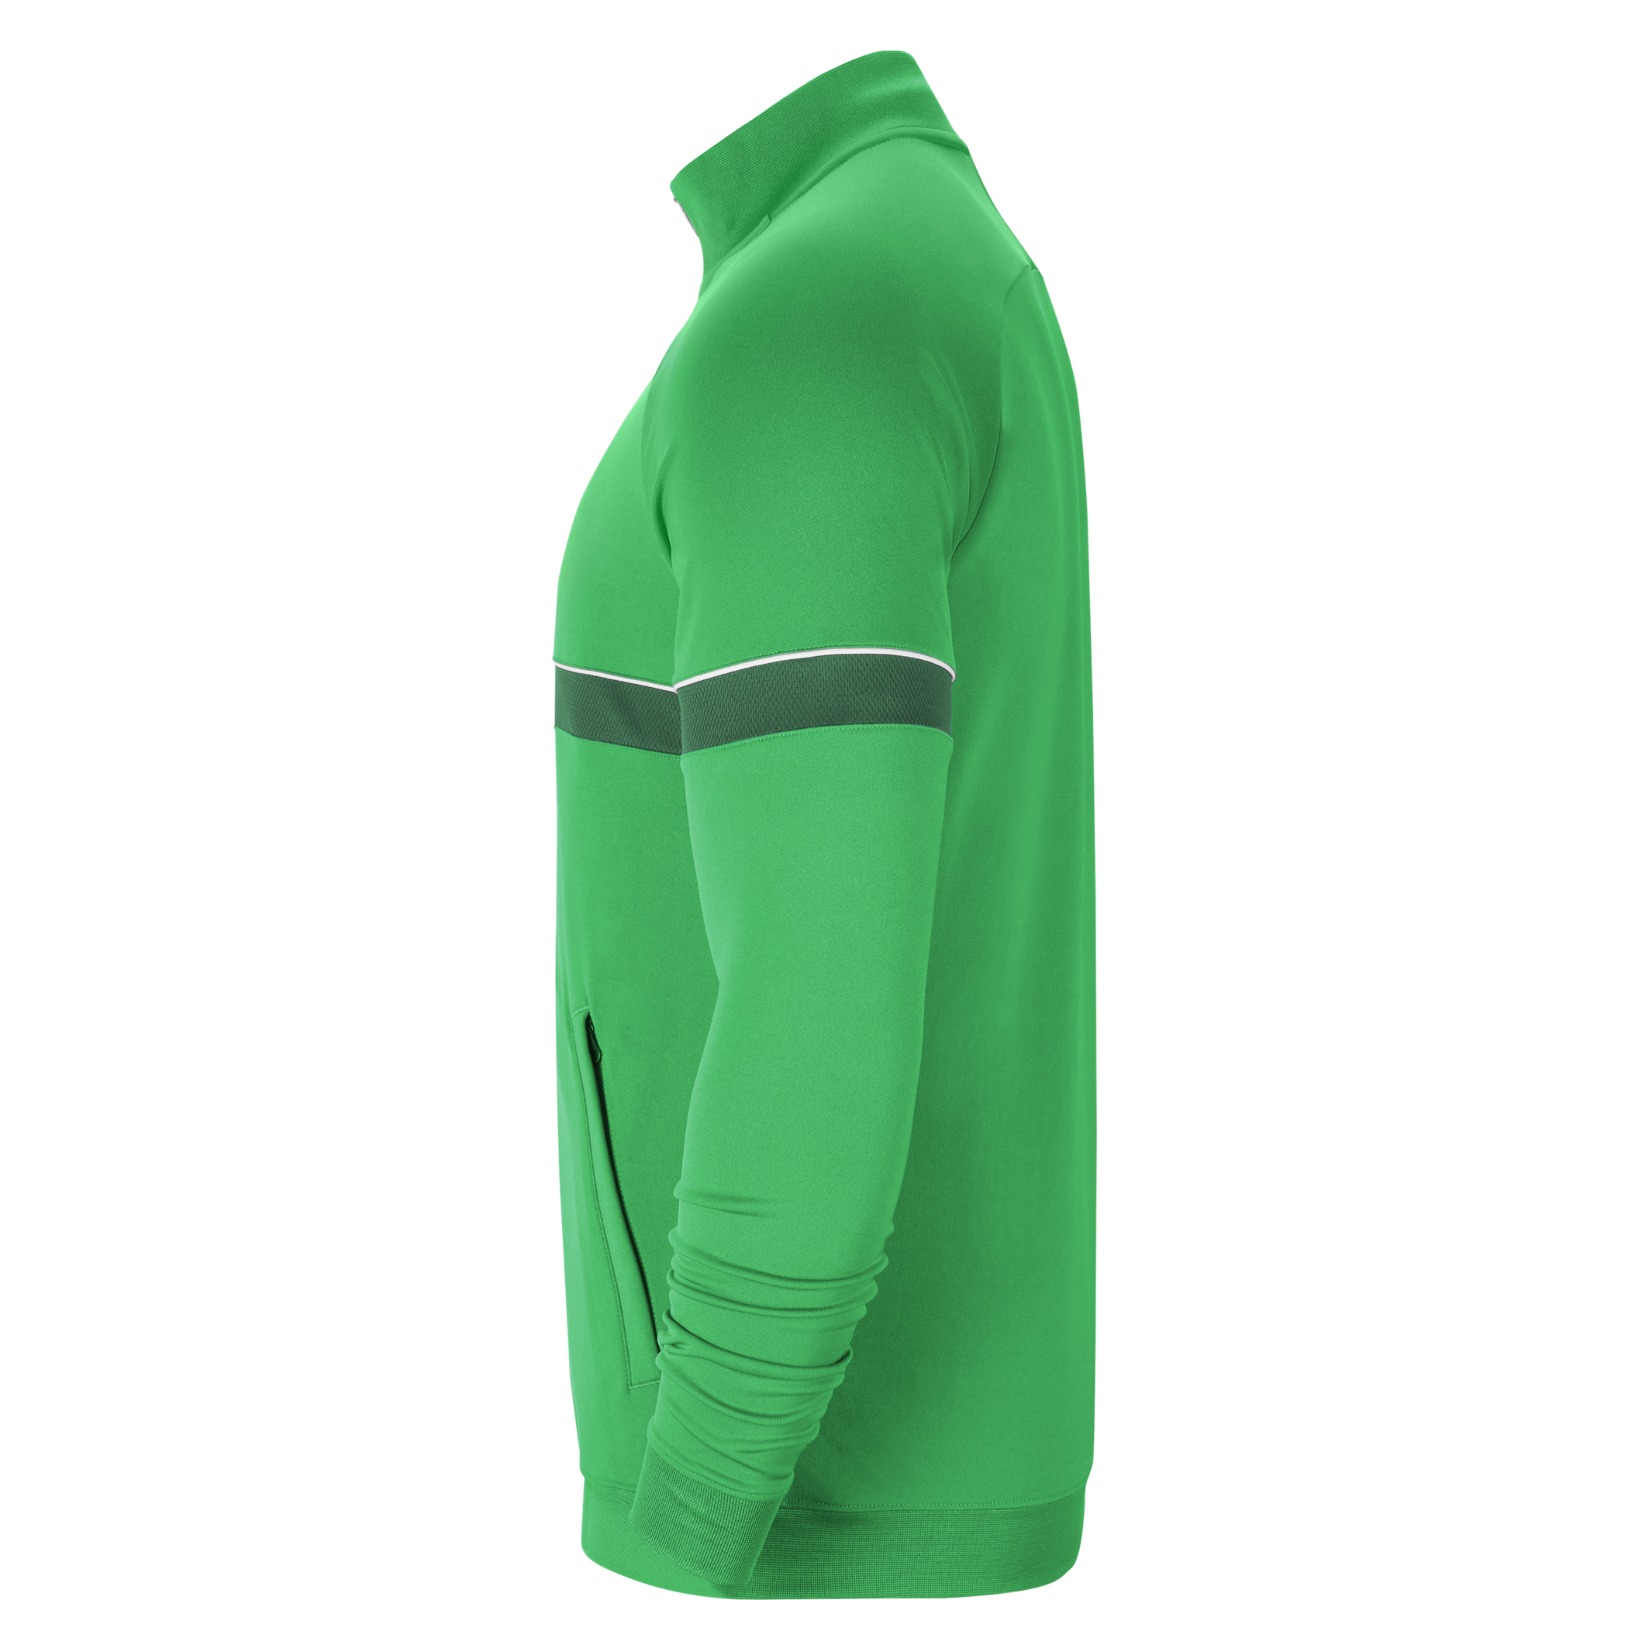 Nike Academy 21 Knit Track Jacket (M) Light Green Spark-White-Pine Green-White